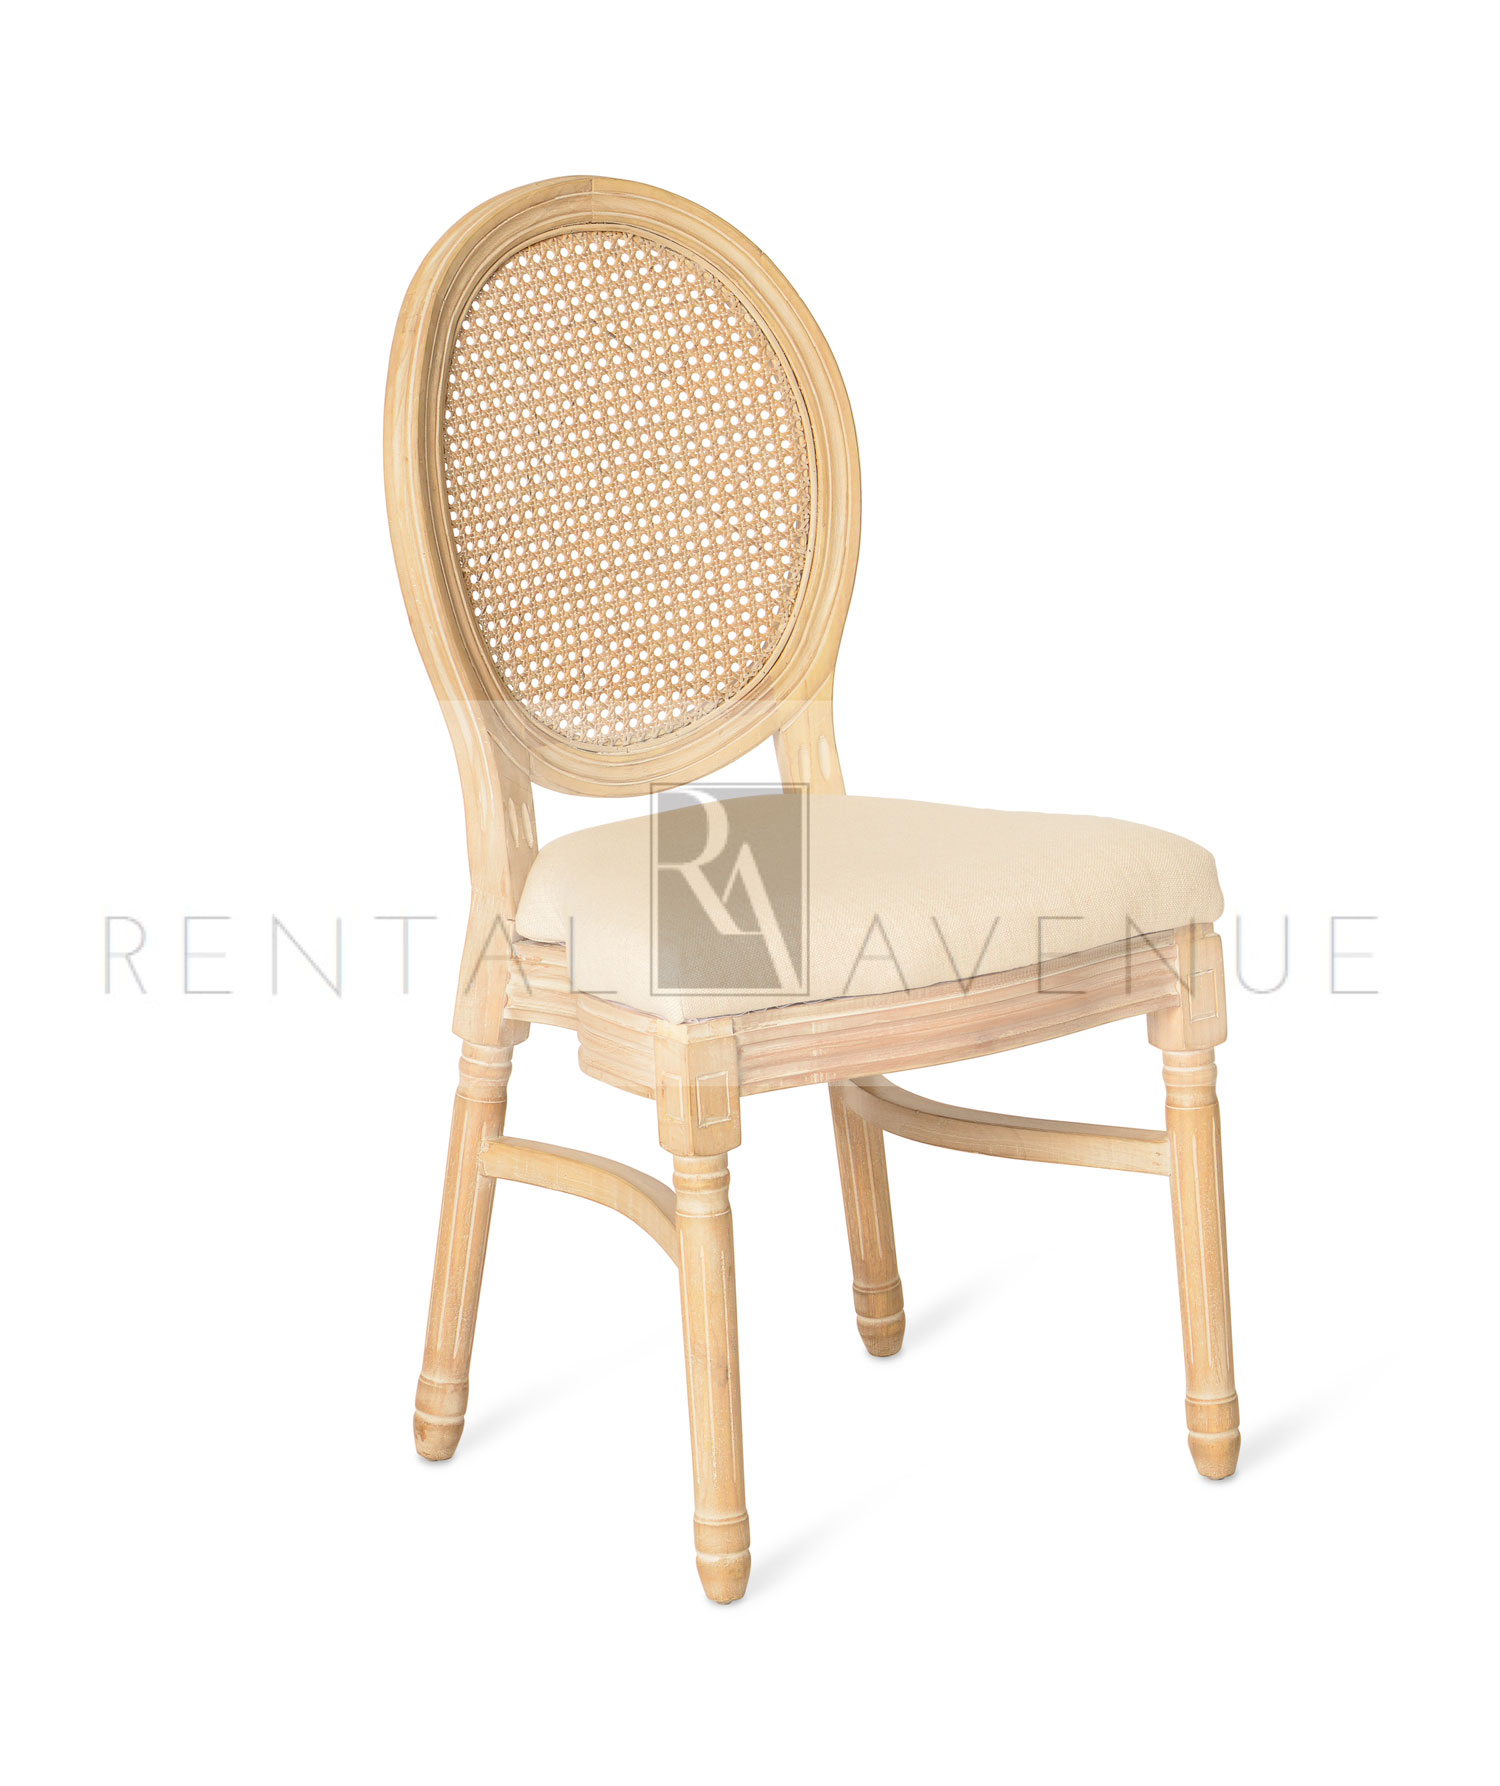 Round Rattan Back Chair Rental